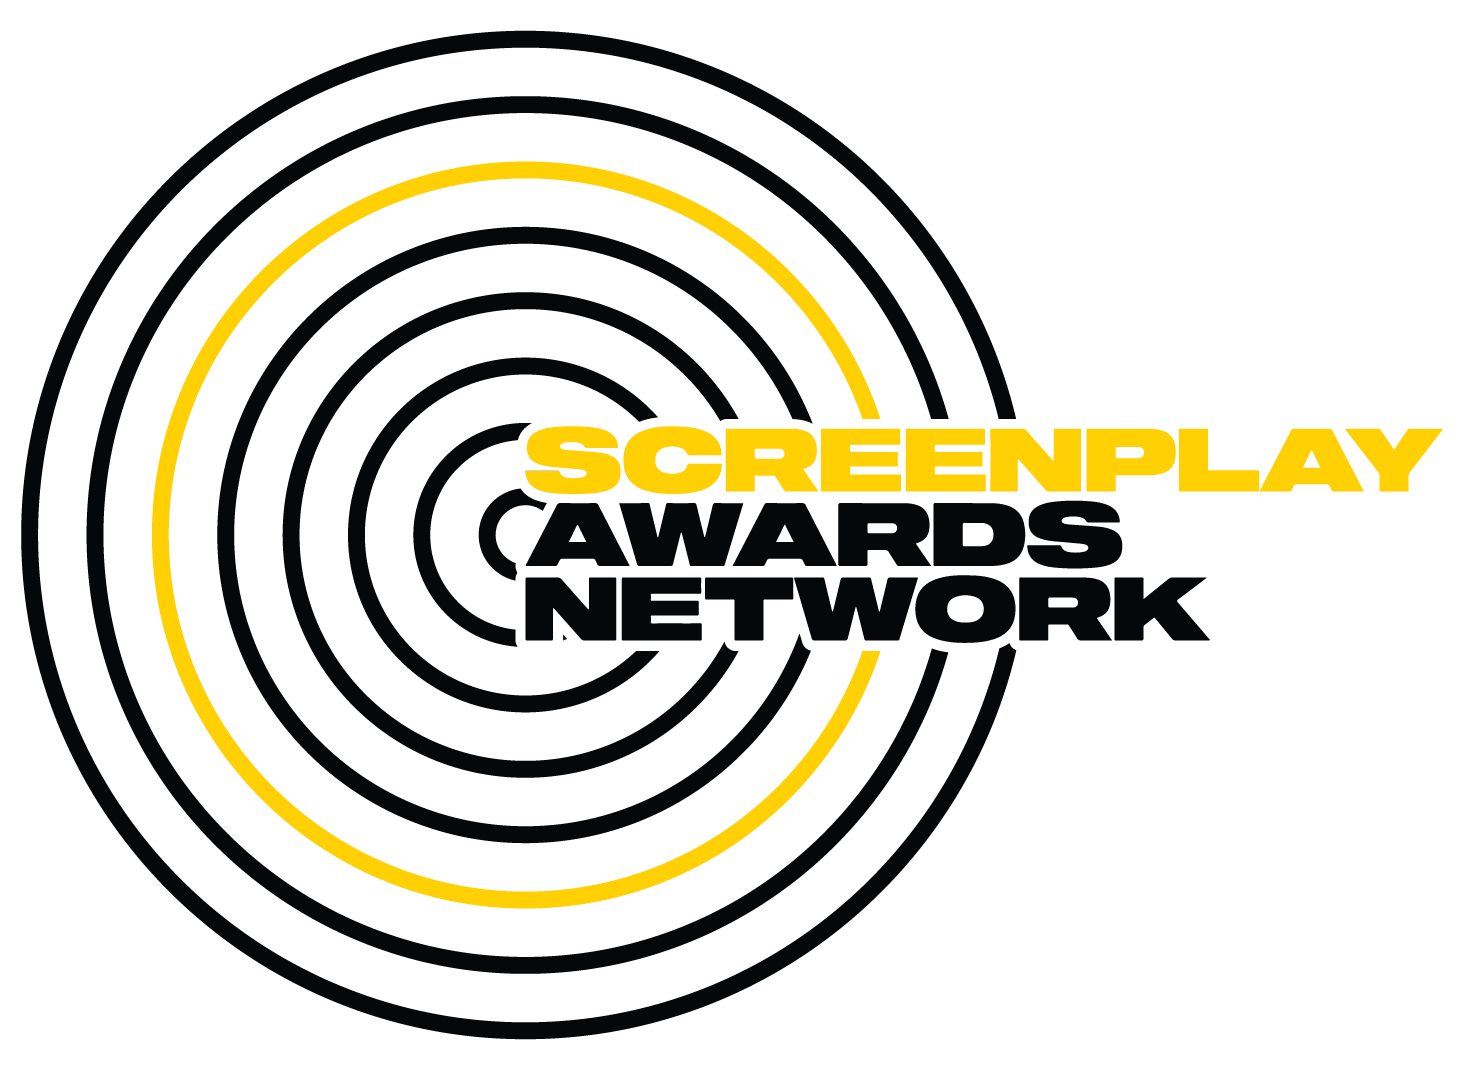 Screenplay Awards Network